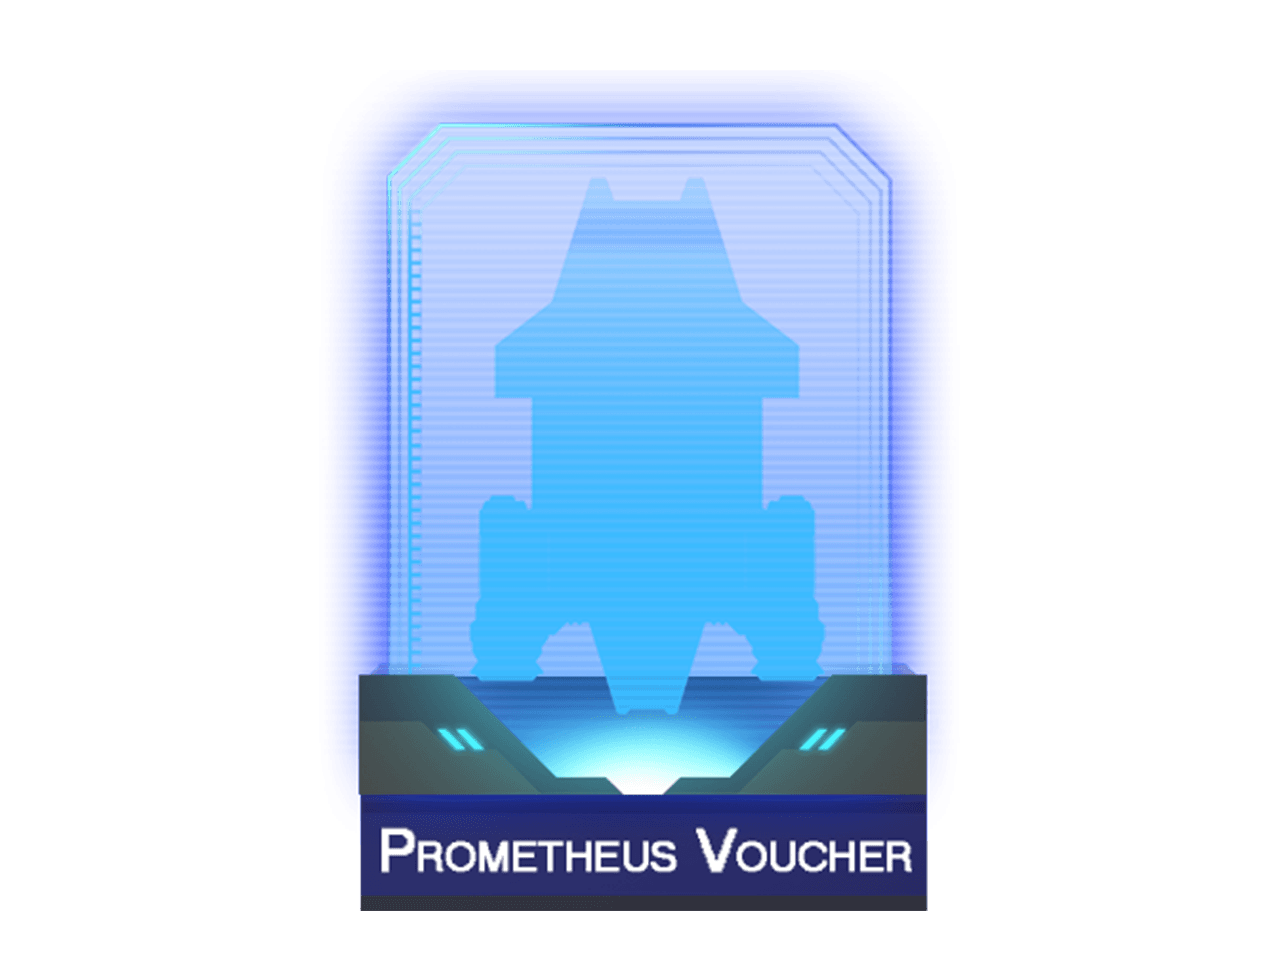 Prometheus Voucher ID #4381